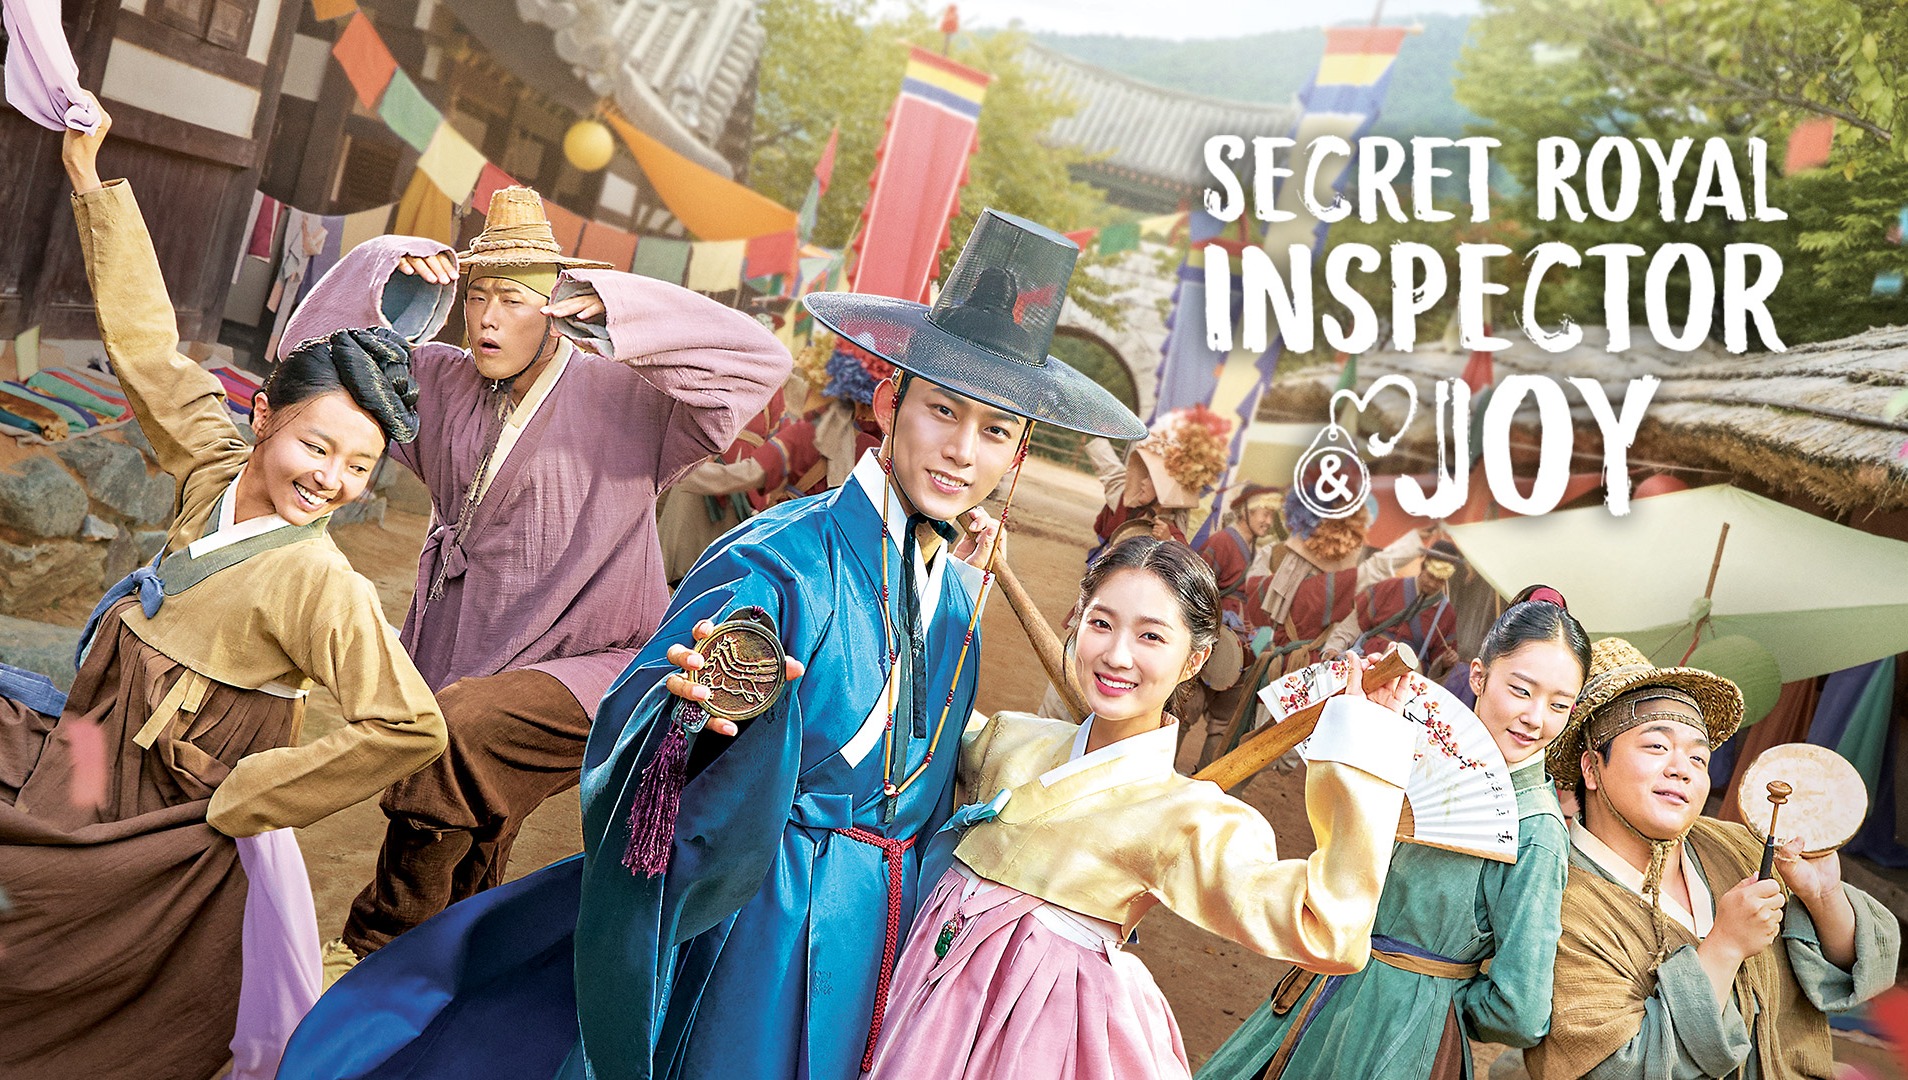 Secret royal inspector joy